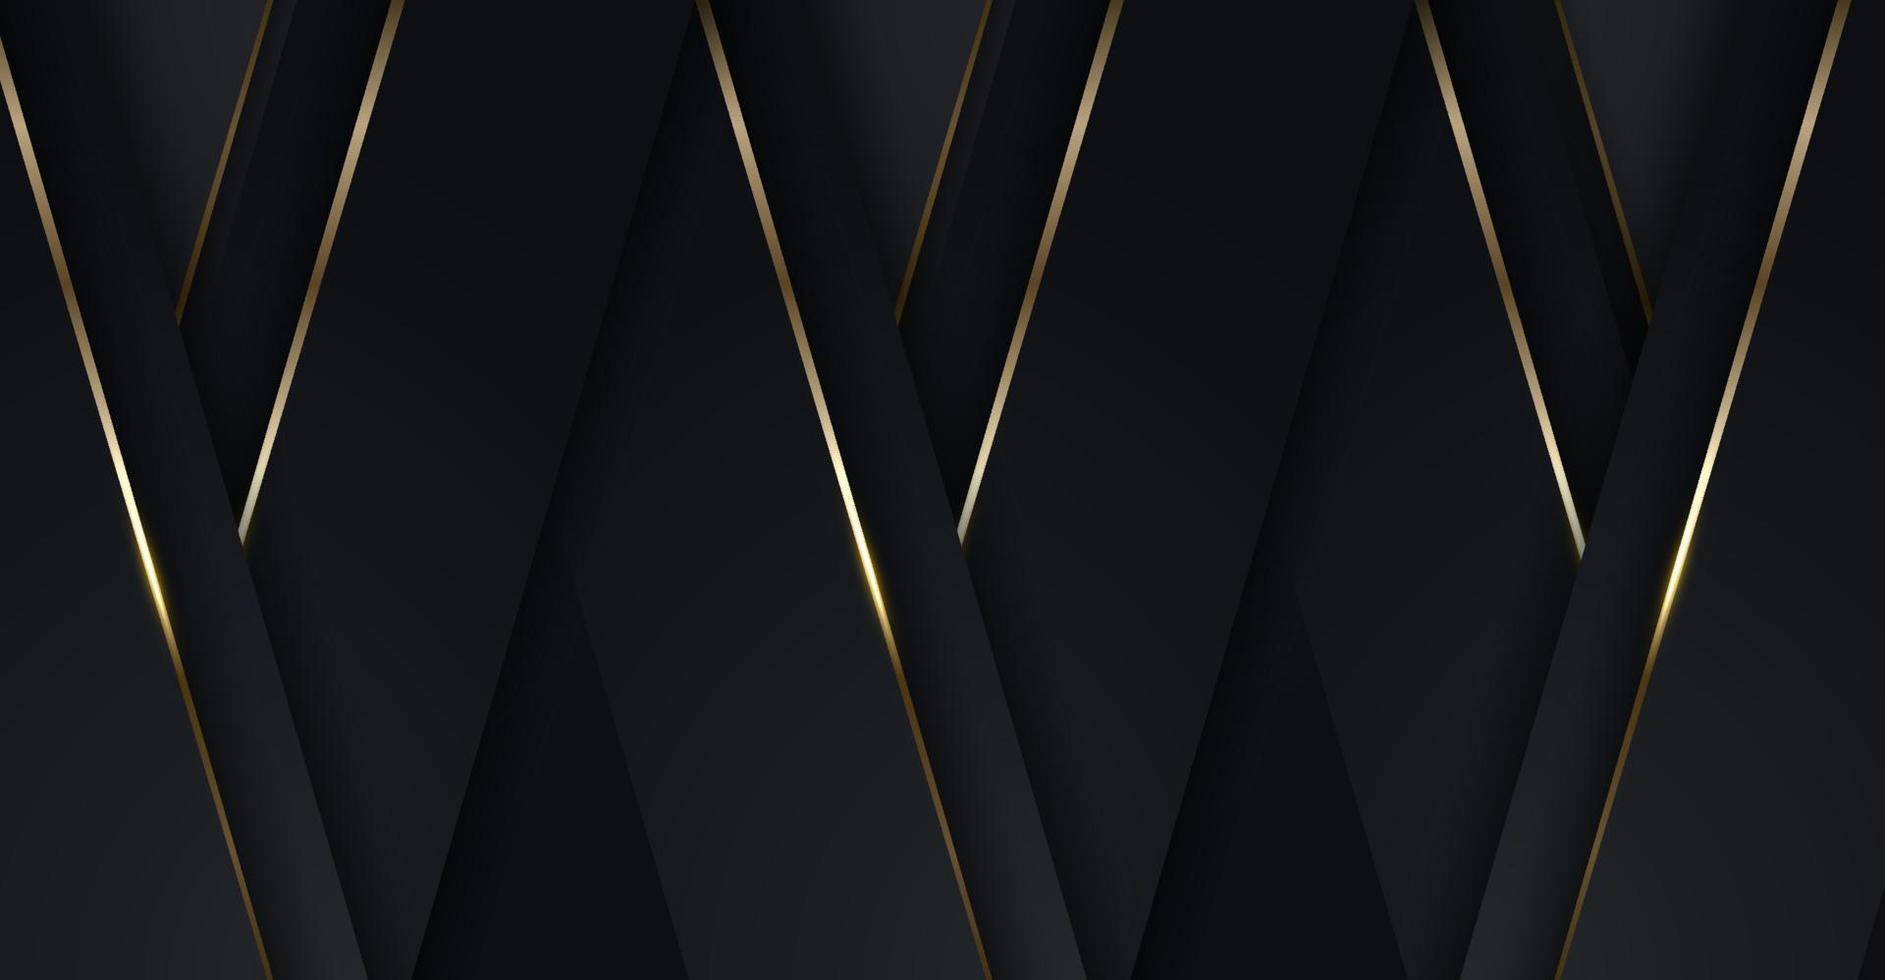 Diseño de plantilla de banner de lujo moderno 3d patrón de rayas diagonales negras con líneas doradas chispas de luz sobre fondo oscuro vector